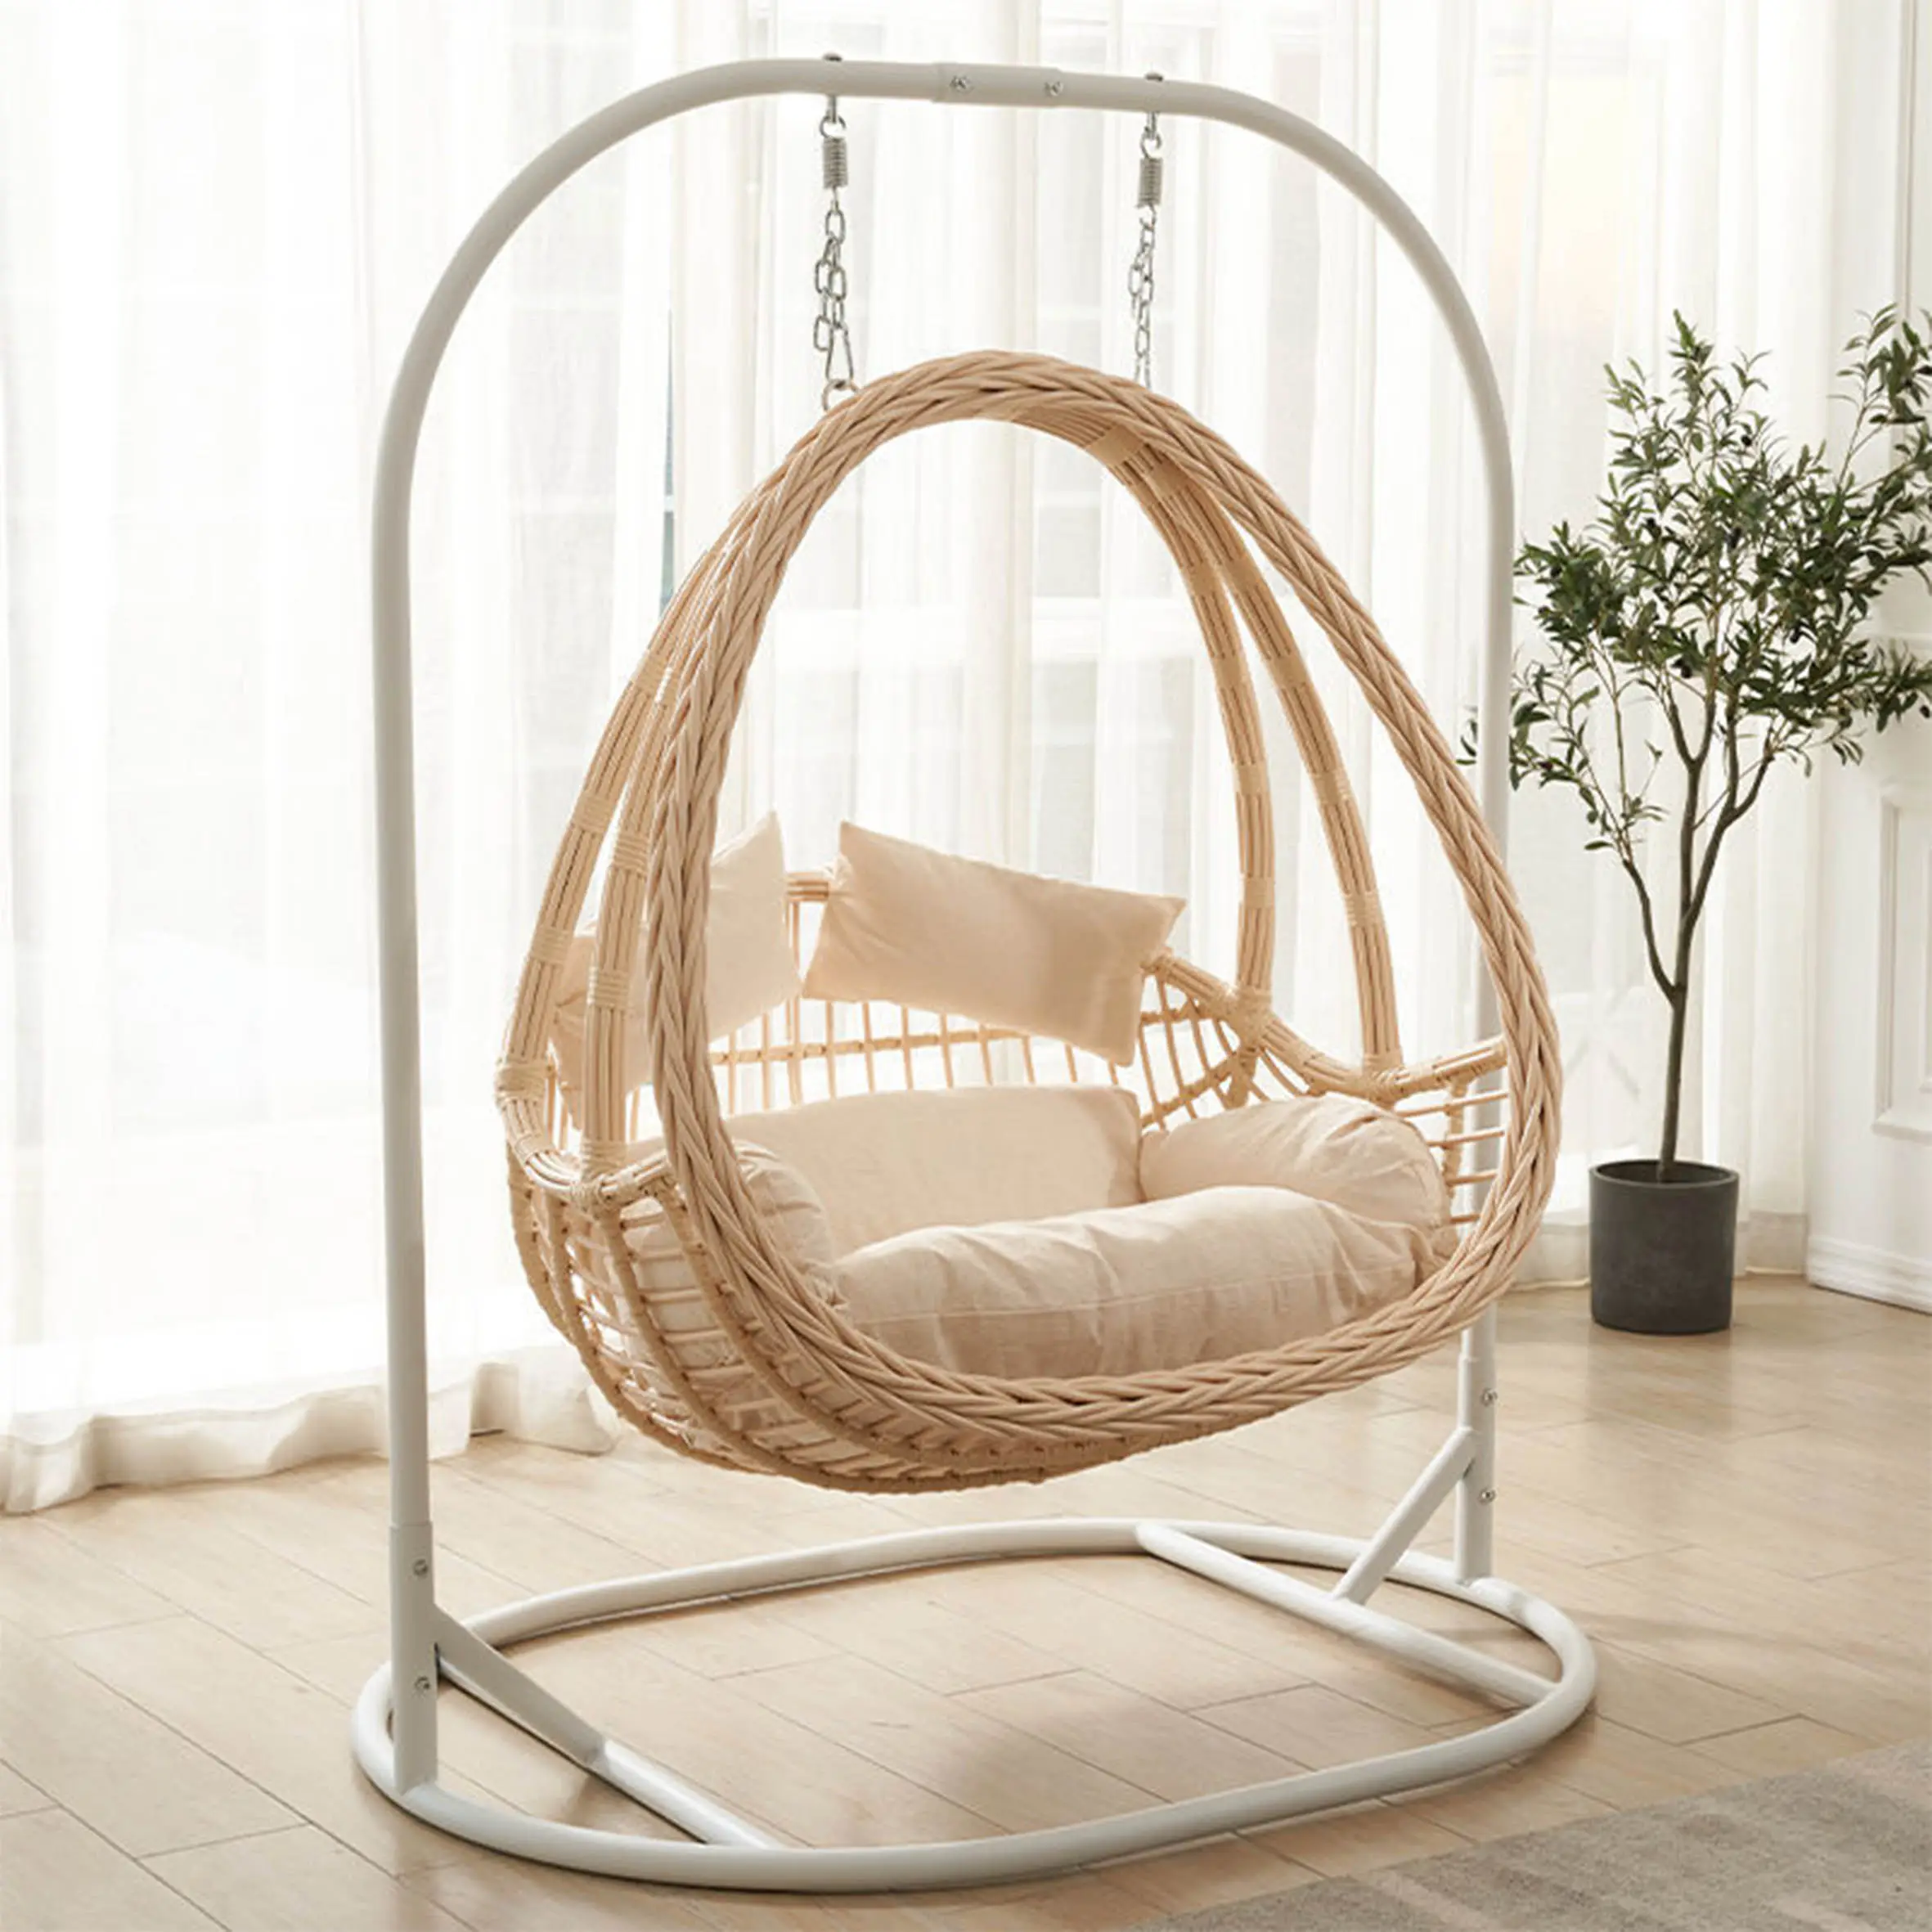 Modern Ergonomic Design Eye catching Basket Swing Reduce,Fatigue Leisure Double Seat Size Large Space Hammock Swing Chair/